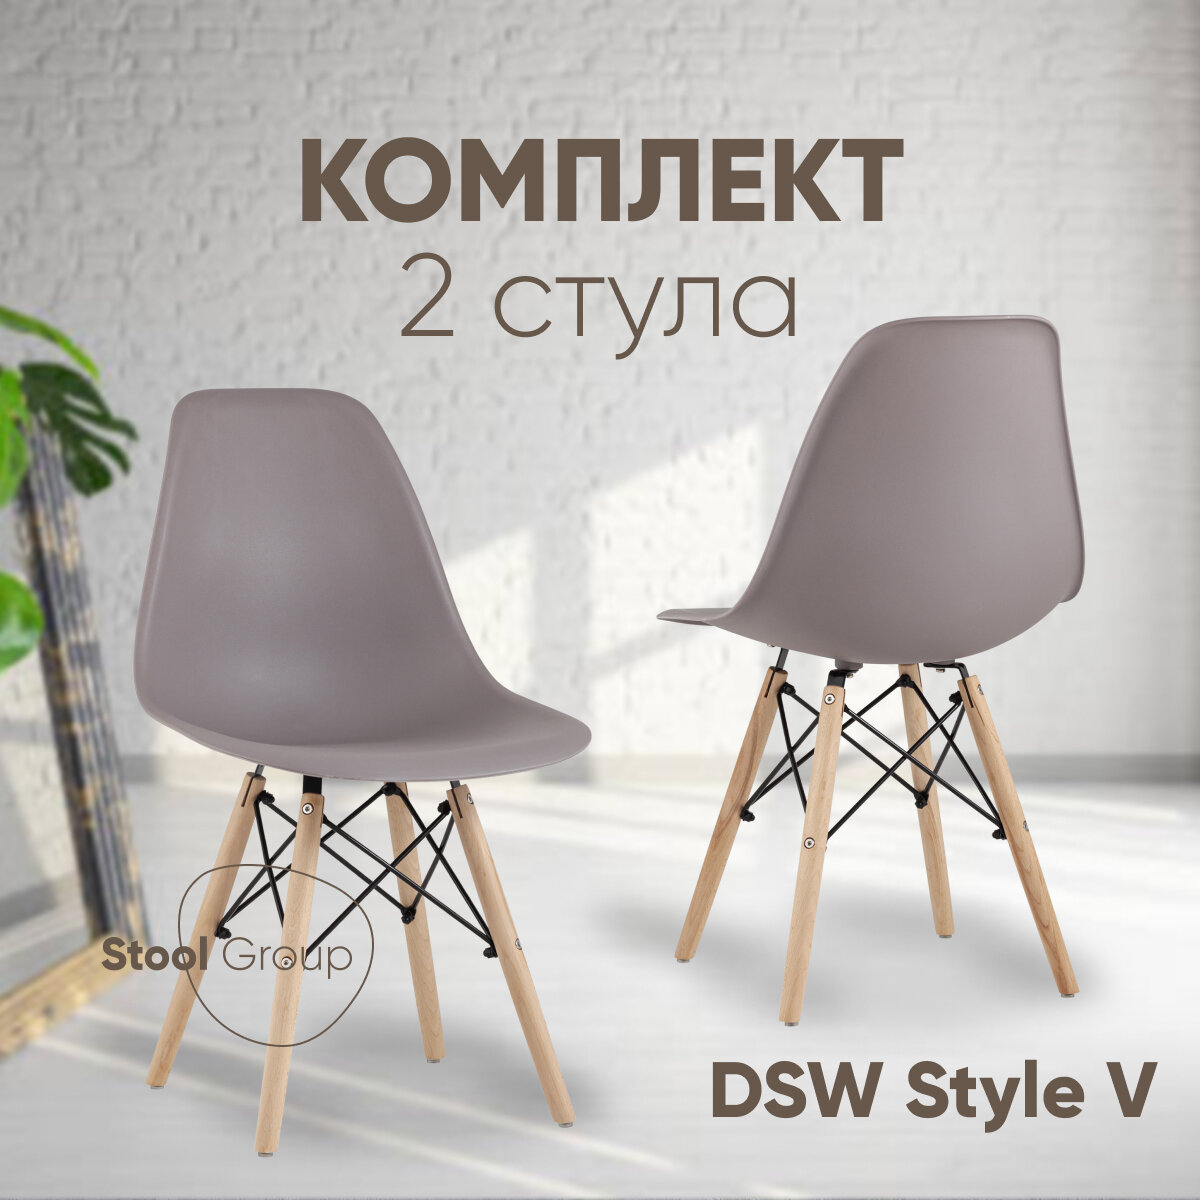 Стул для кухни DSW Style V, темно-серый (комплект 2 стула)